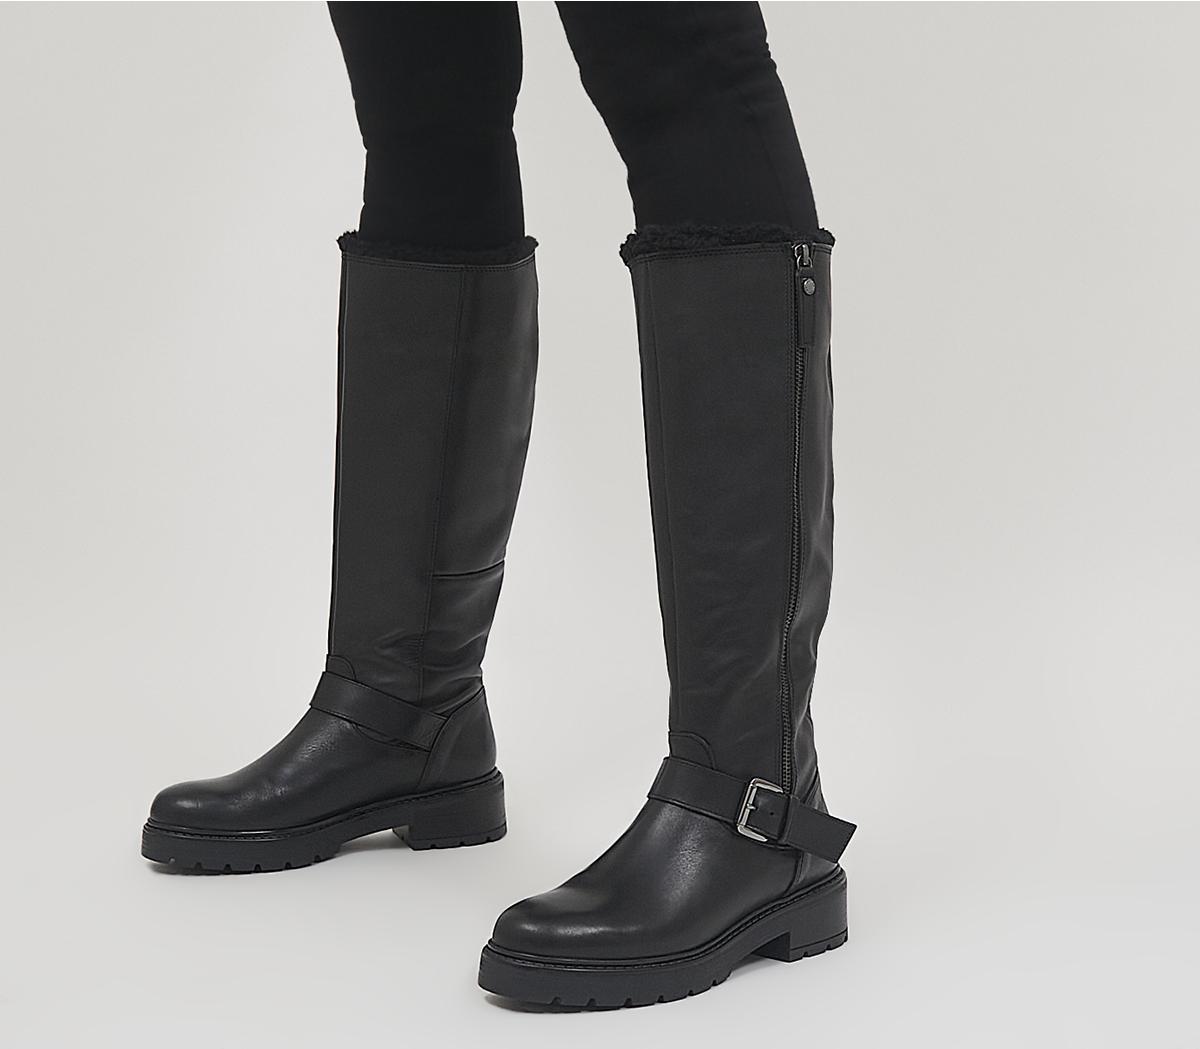 OfficeKaduna Fur Trimmed Knee High BootsBlack Leather